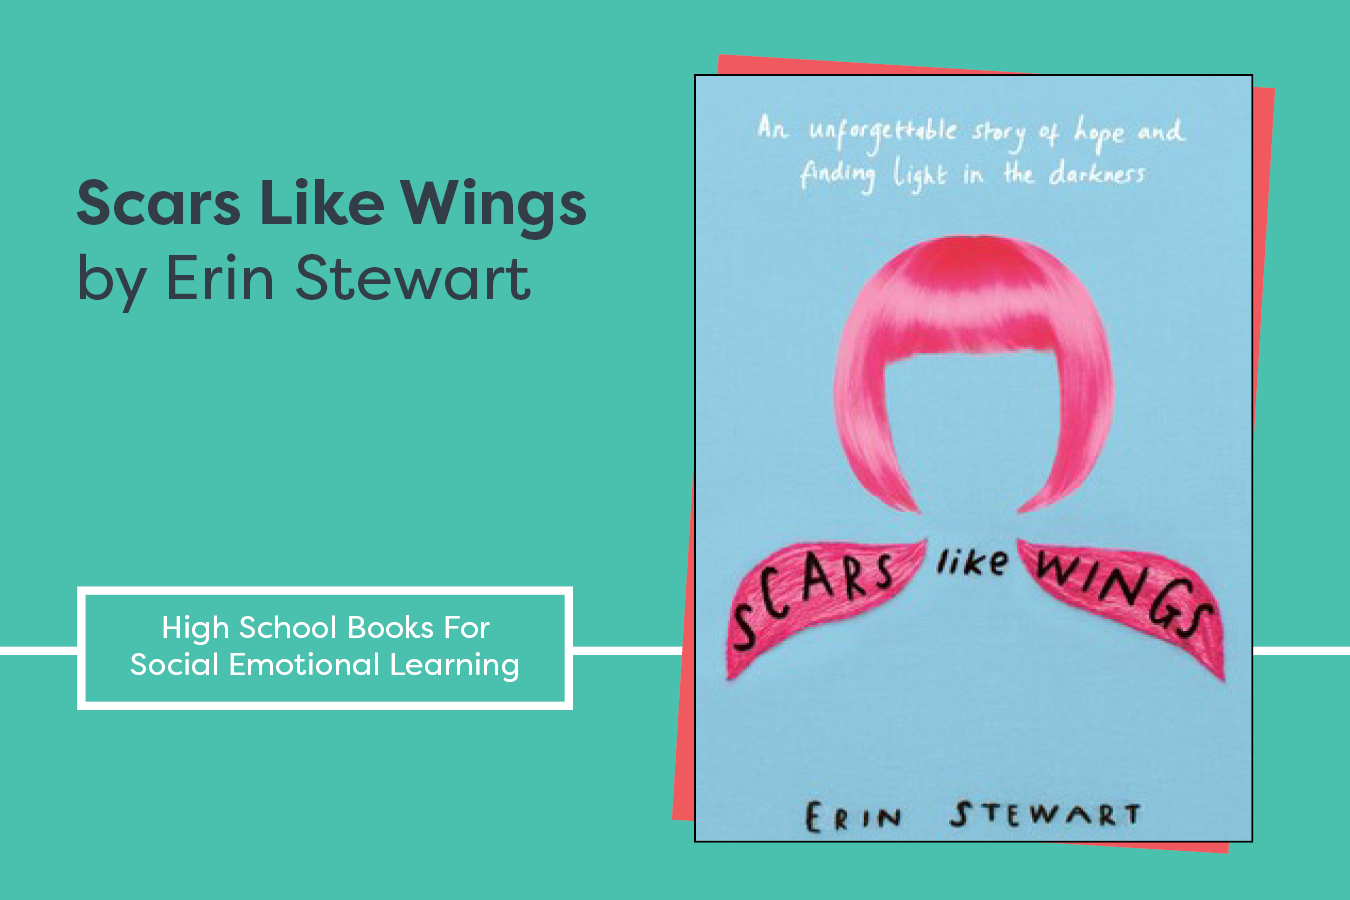 High School Books For Social Emotional Learning